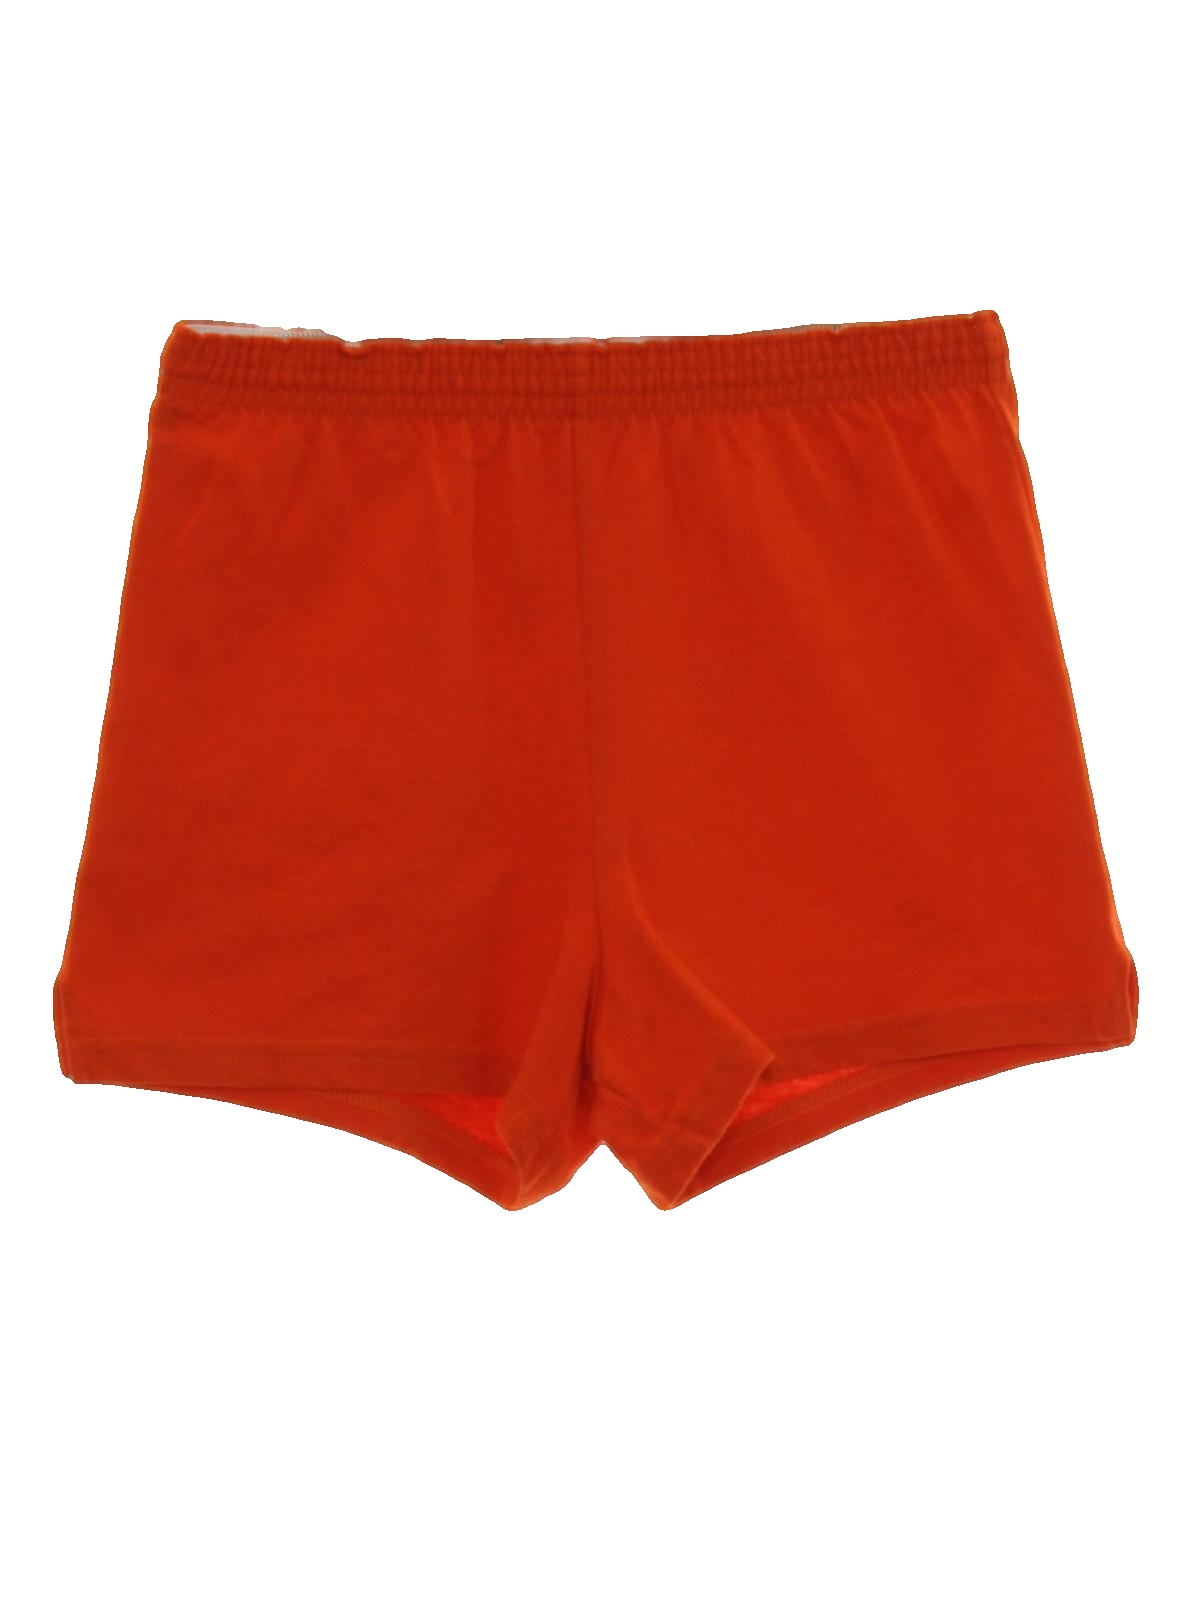 Retro Eighties Shorts: 80s -Soffe- Unisex bright dark orange background ...